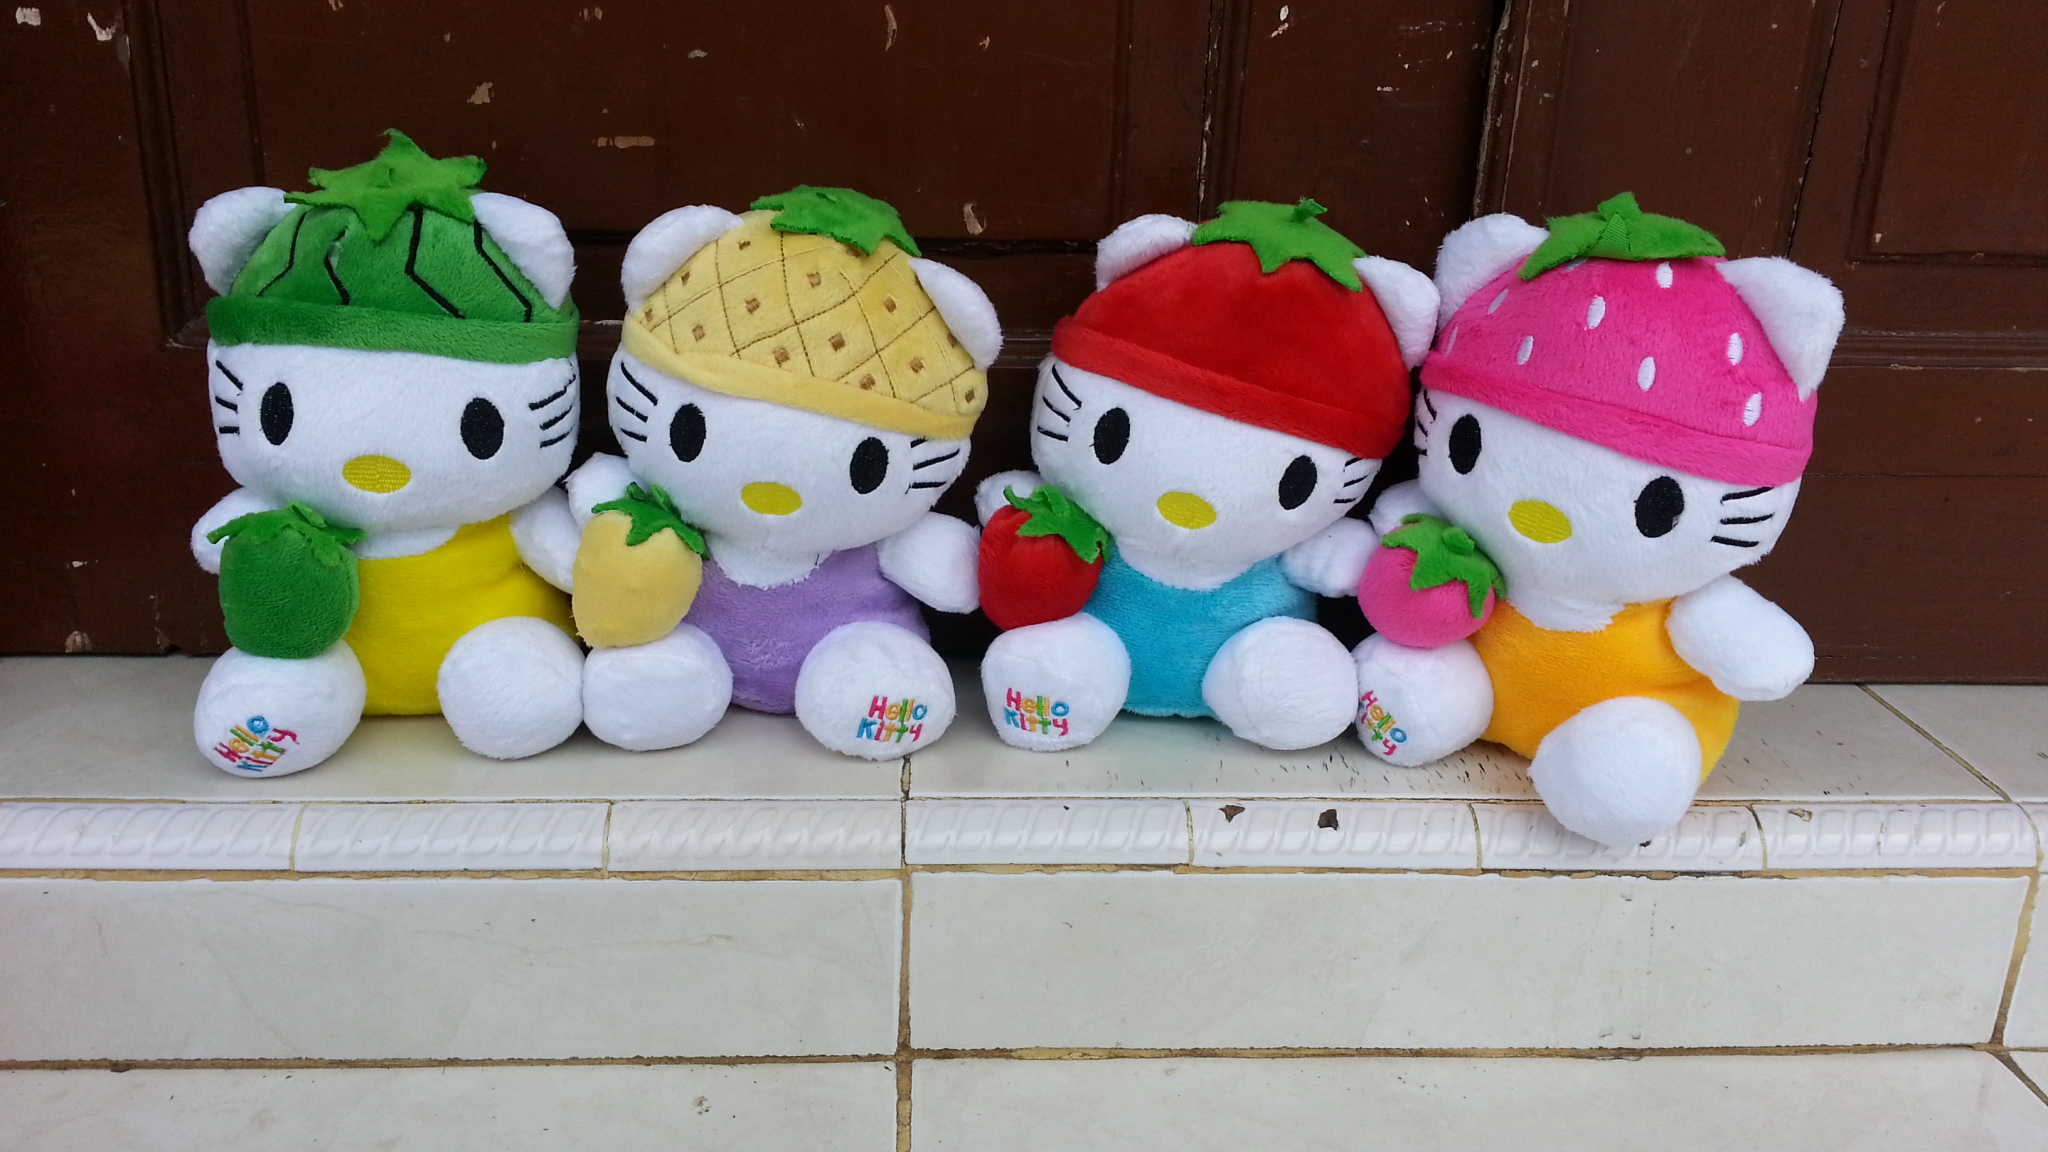 Jual Boneka Hello Kitty Kostum Buah Toko Hello Kitty Online Jual